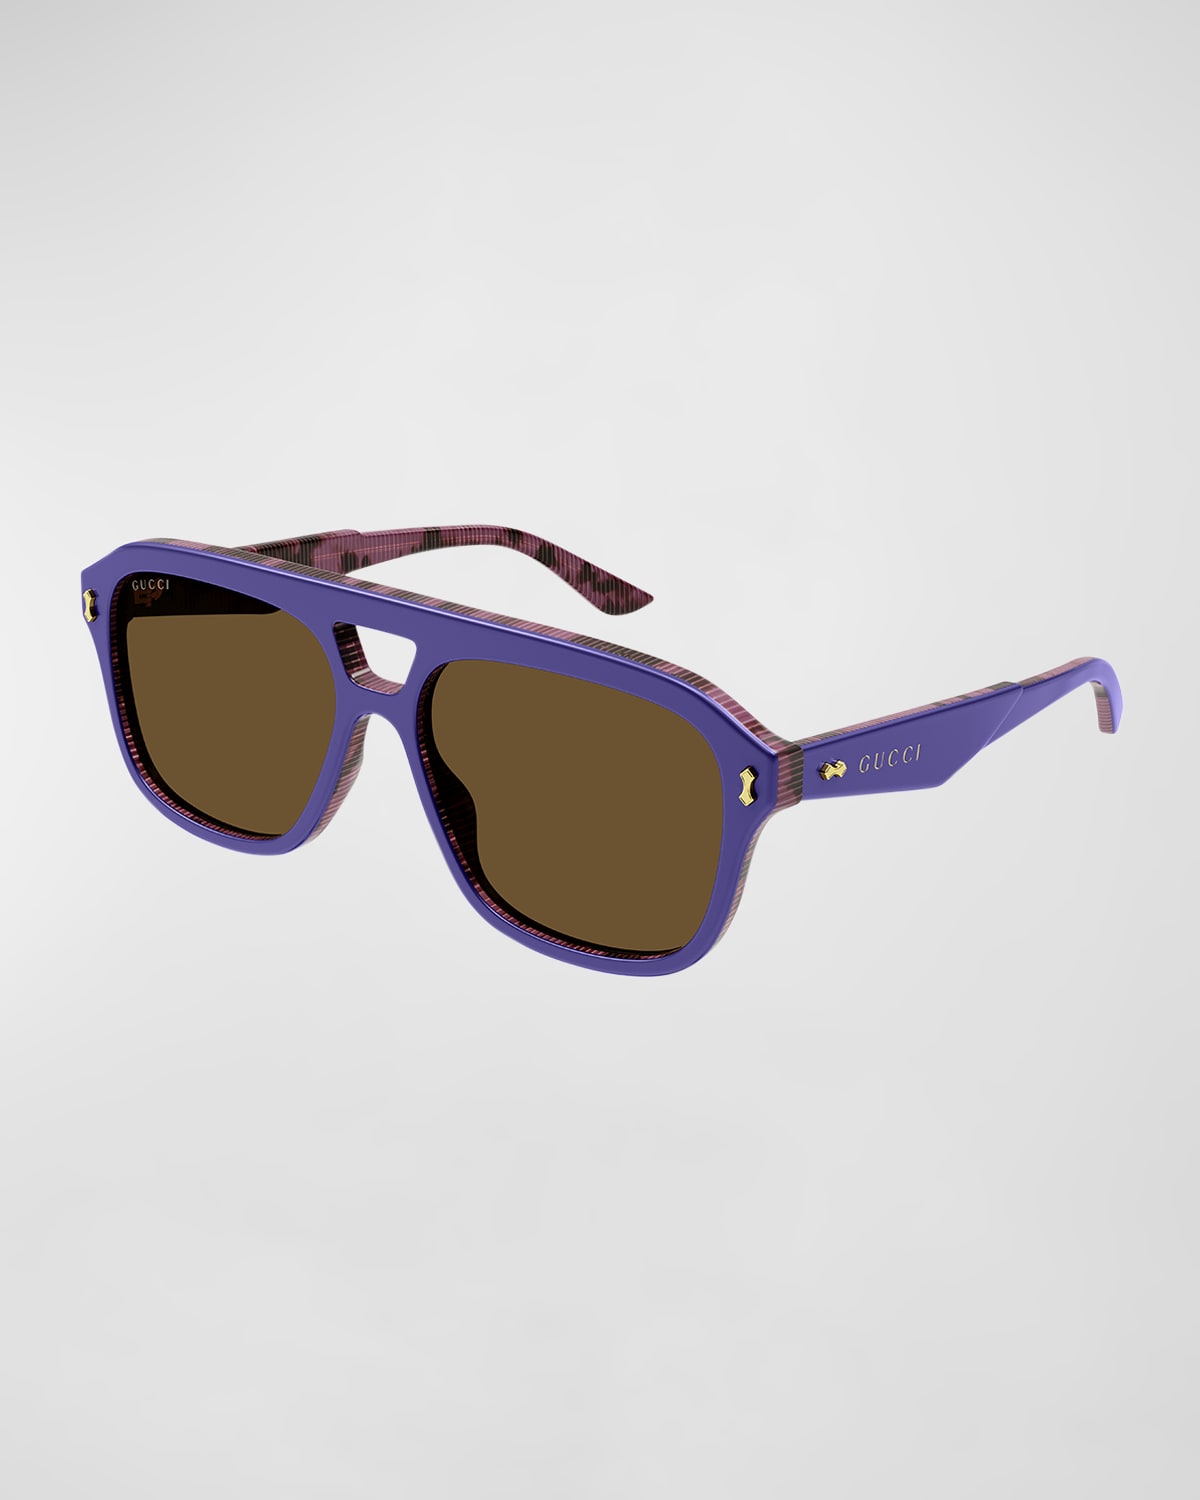 Balenciaga Men's Square Acetate Sunglasses with Etched Logo | Neiman Marcus